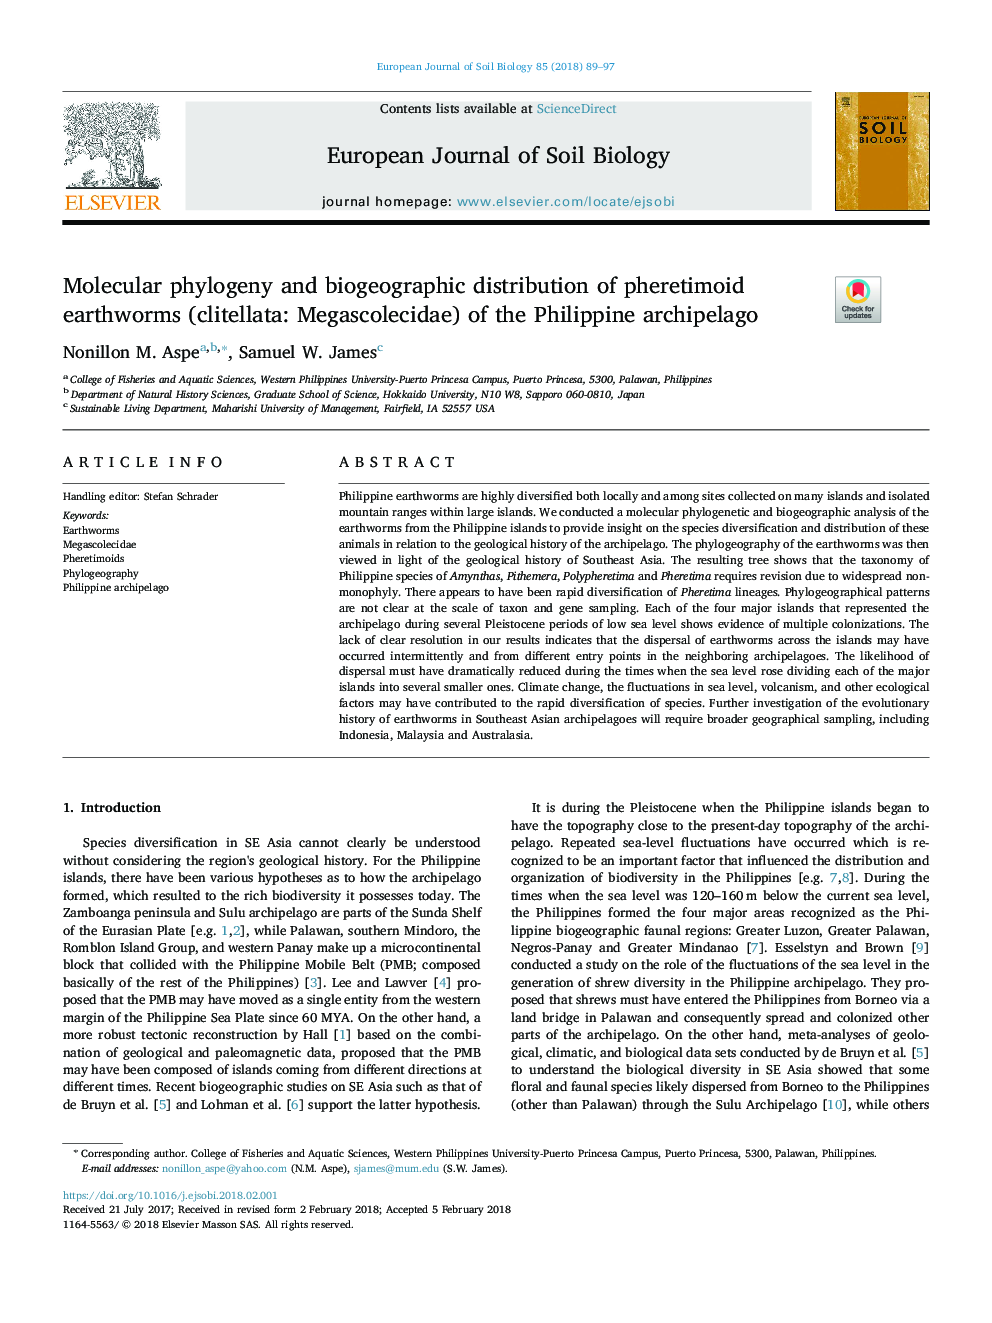 Molecular phylogeny and biogeographic distribution of pheretimoid earthworms (clitellata: Megascolecidae) of the Philippine archipelago